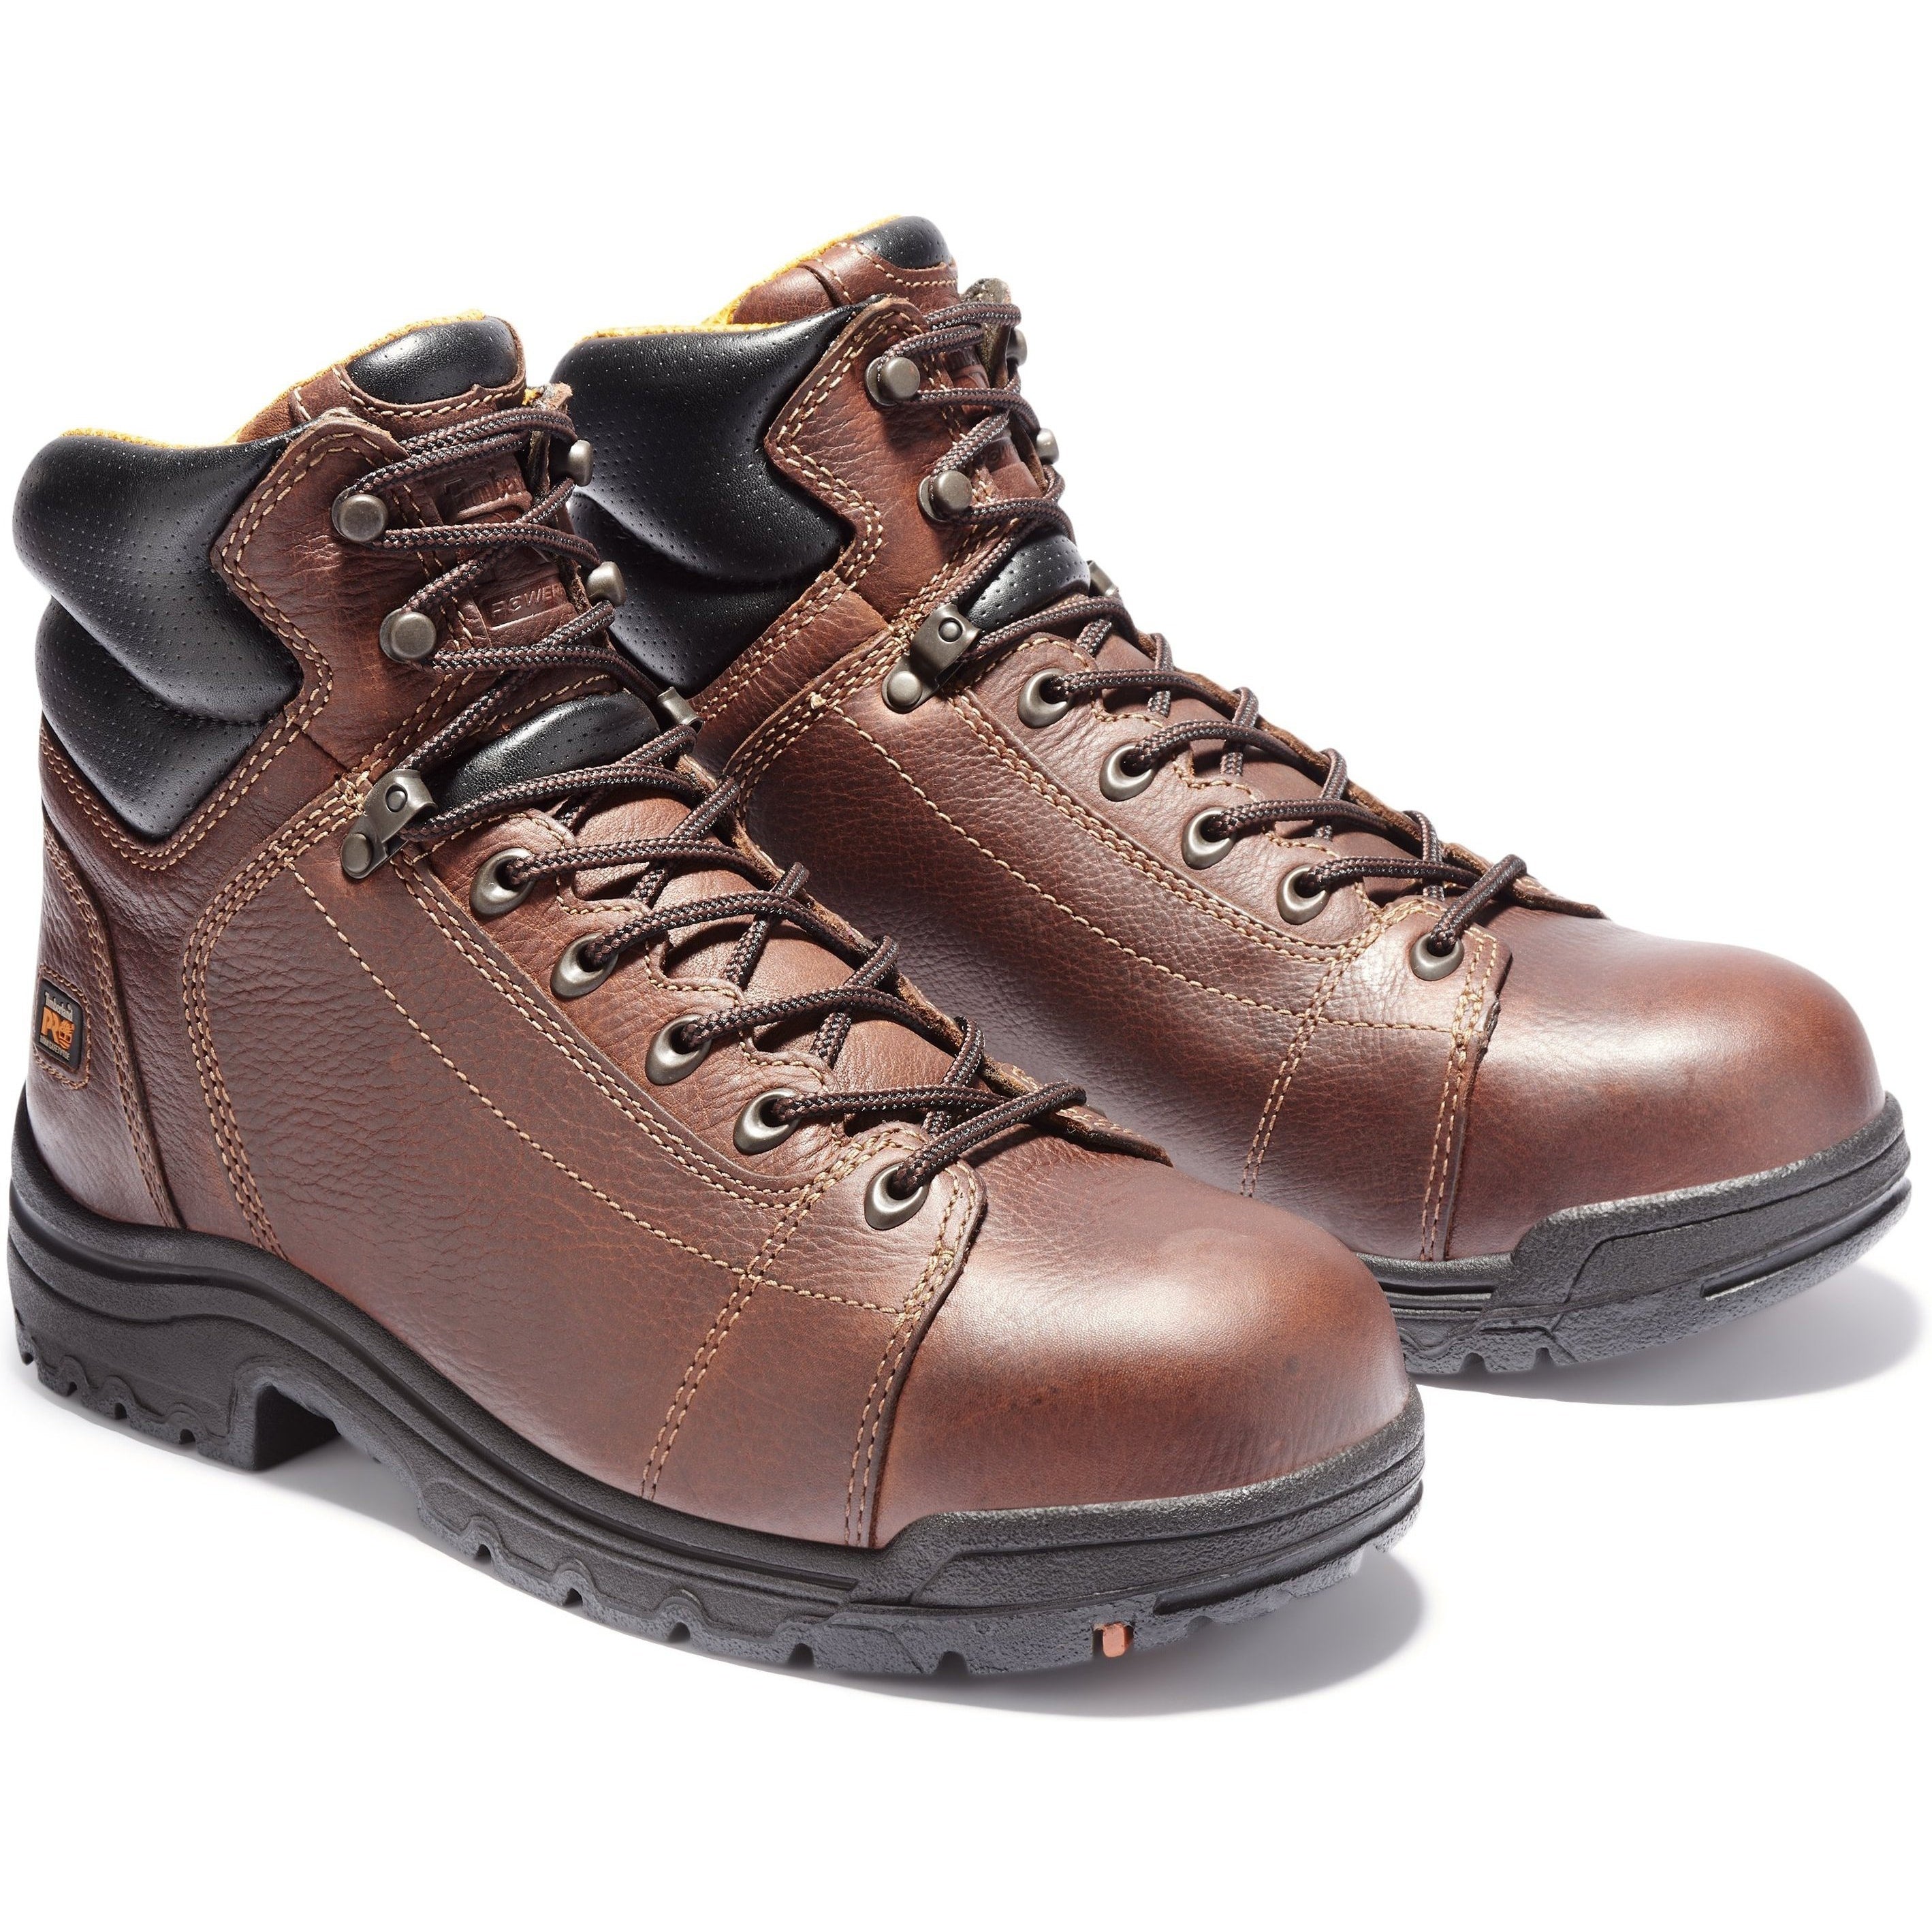 Timberland PRO Men's TiTAN 6" Alloy Toe Work Boots -Brown- TB150506242 7 / Medium / Brown - Overlook Boots